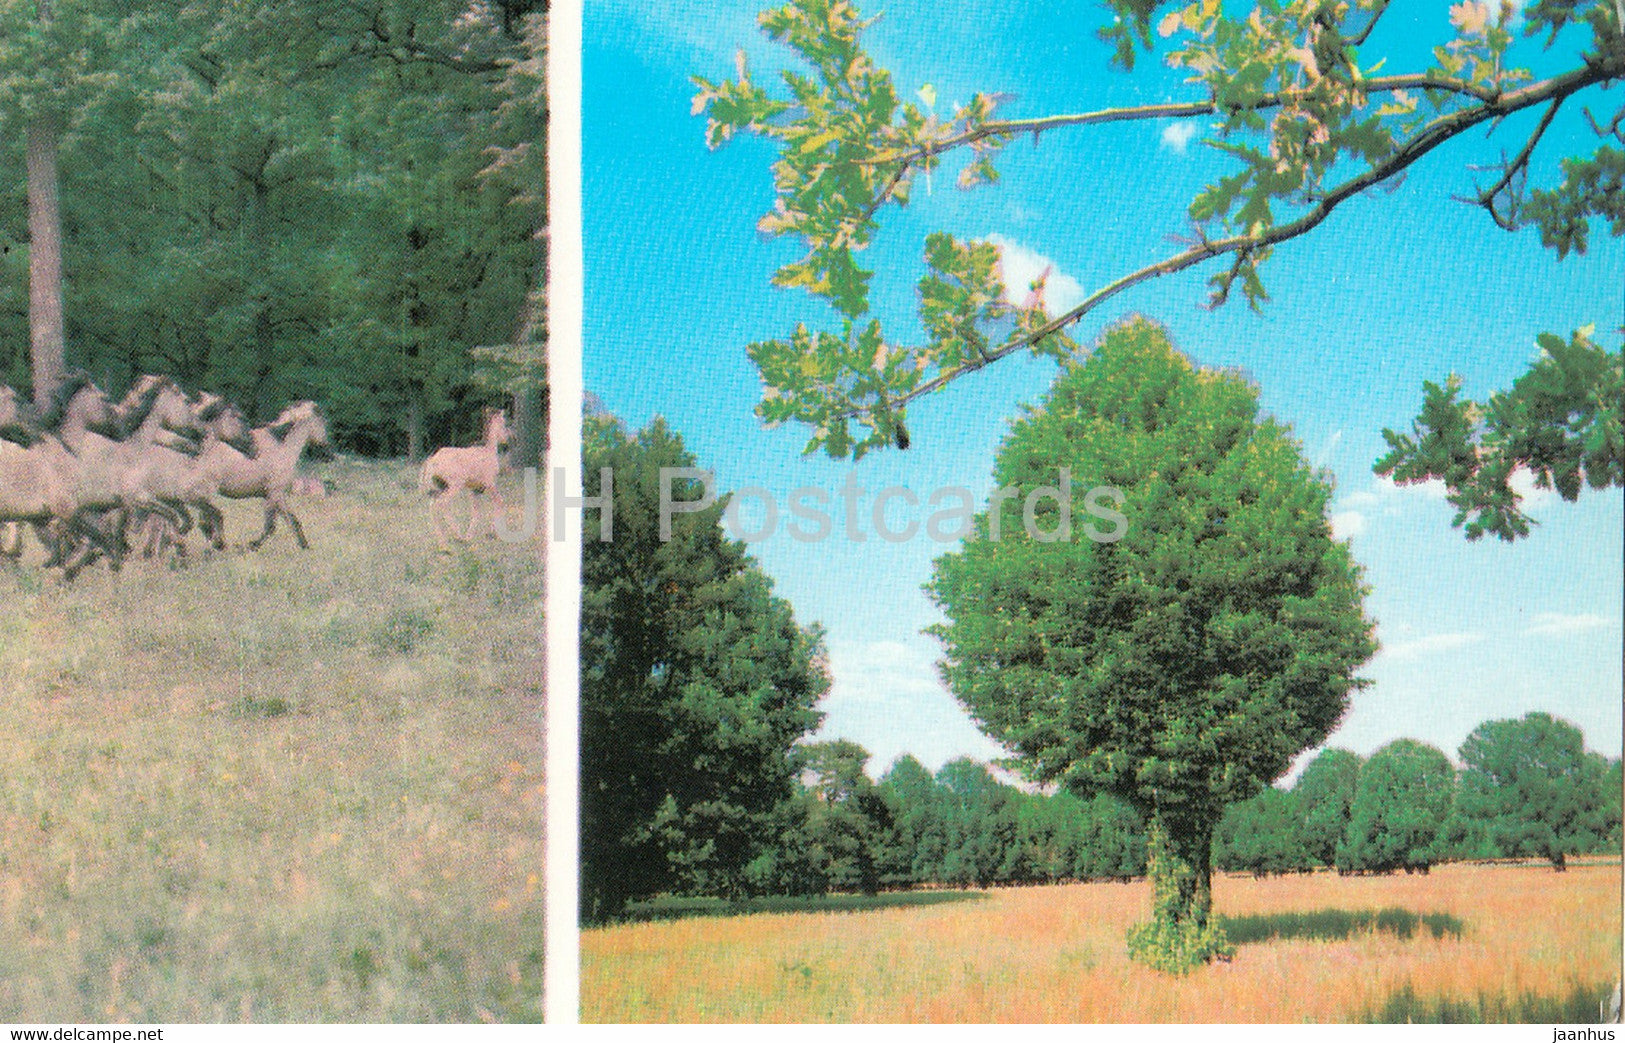 Belovezhskaya Pushcha National Park - Mongolian Wild Horses - A Forest Cleaning - 1981 - Berarus USSR - unused - JH Postcards